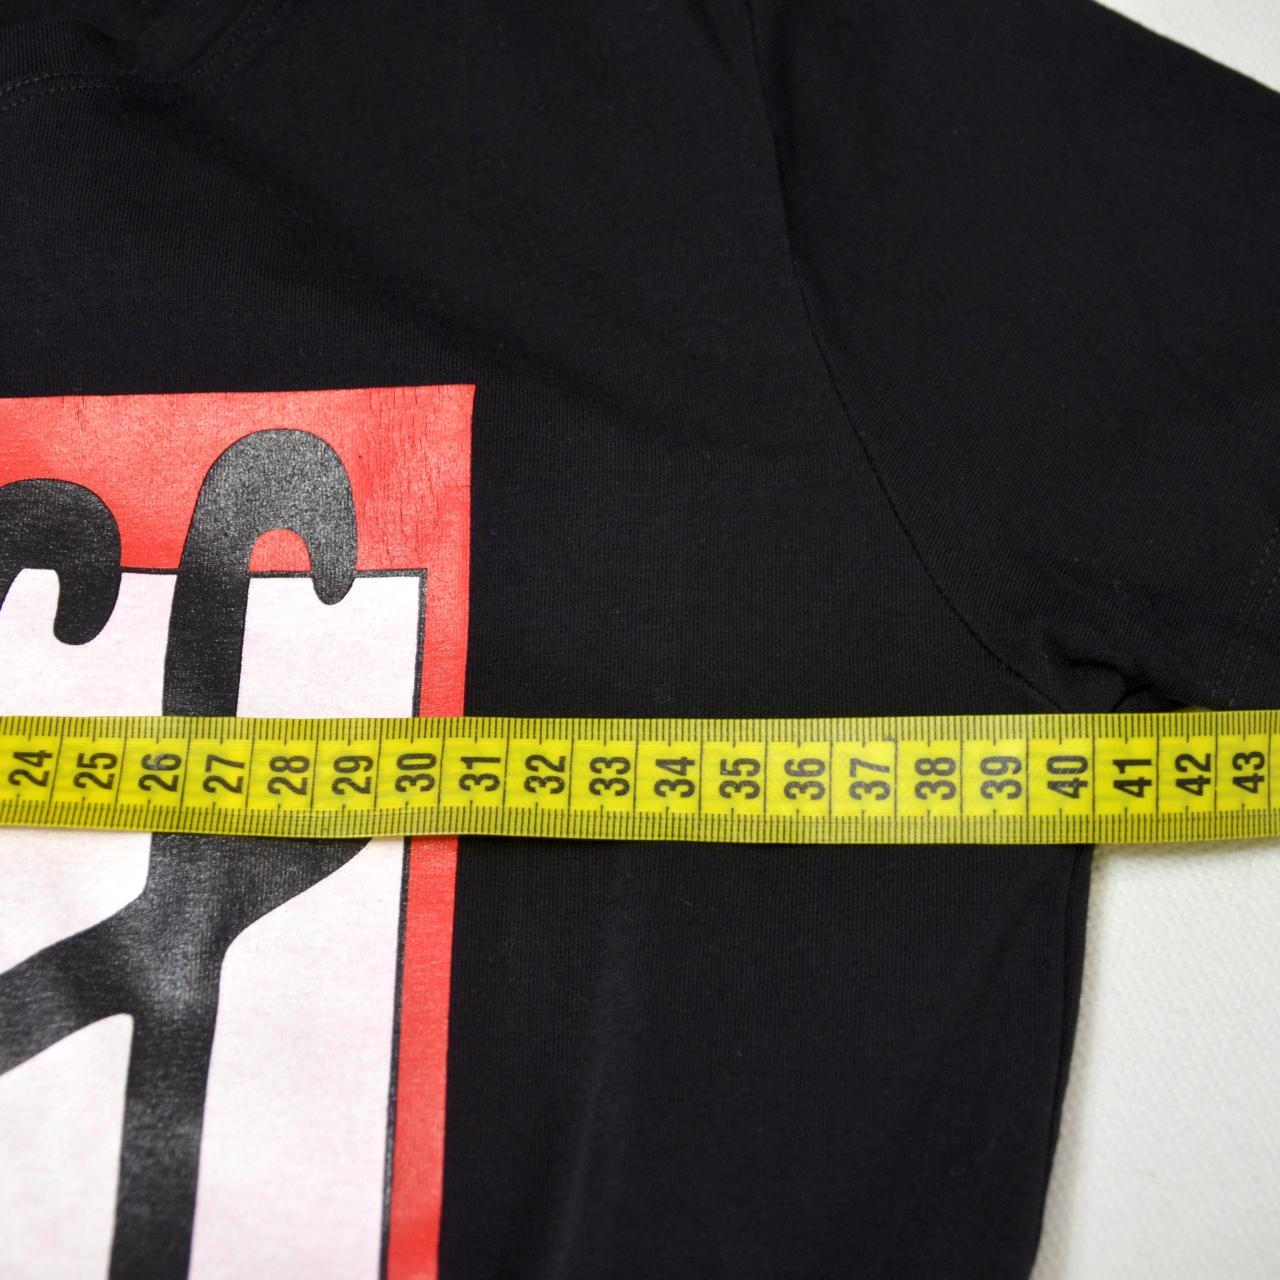 Product Image 4 - DUFF women's stretch T-shirt size